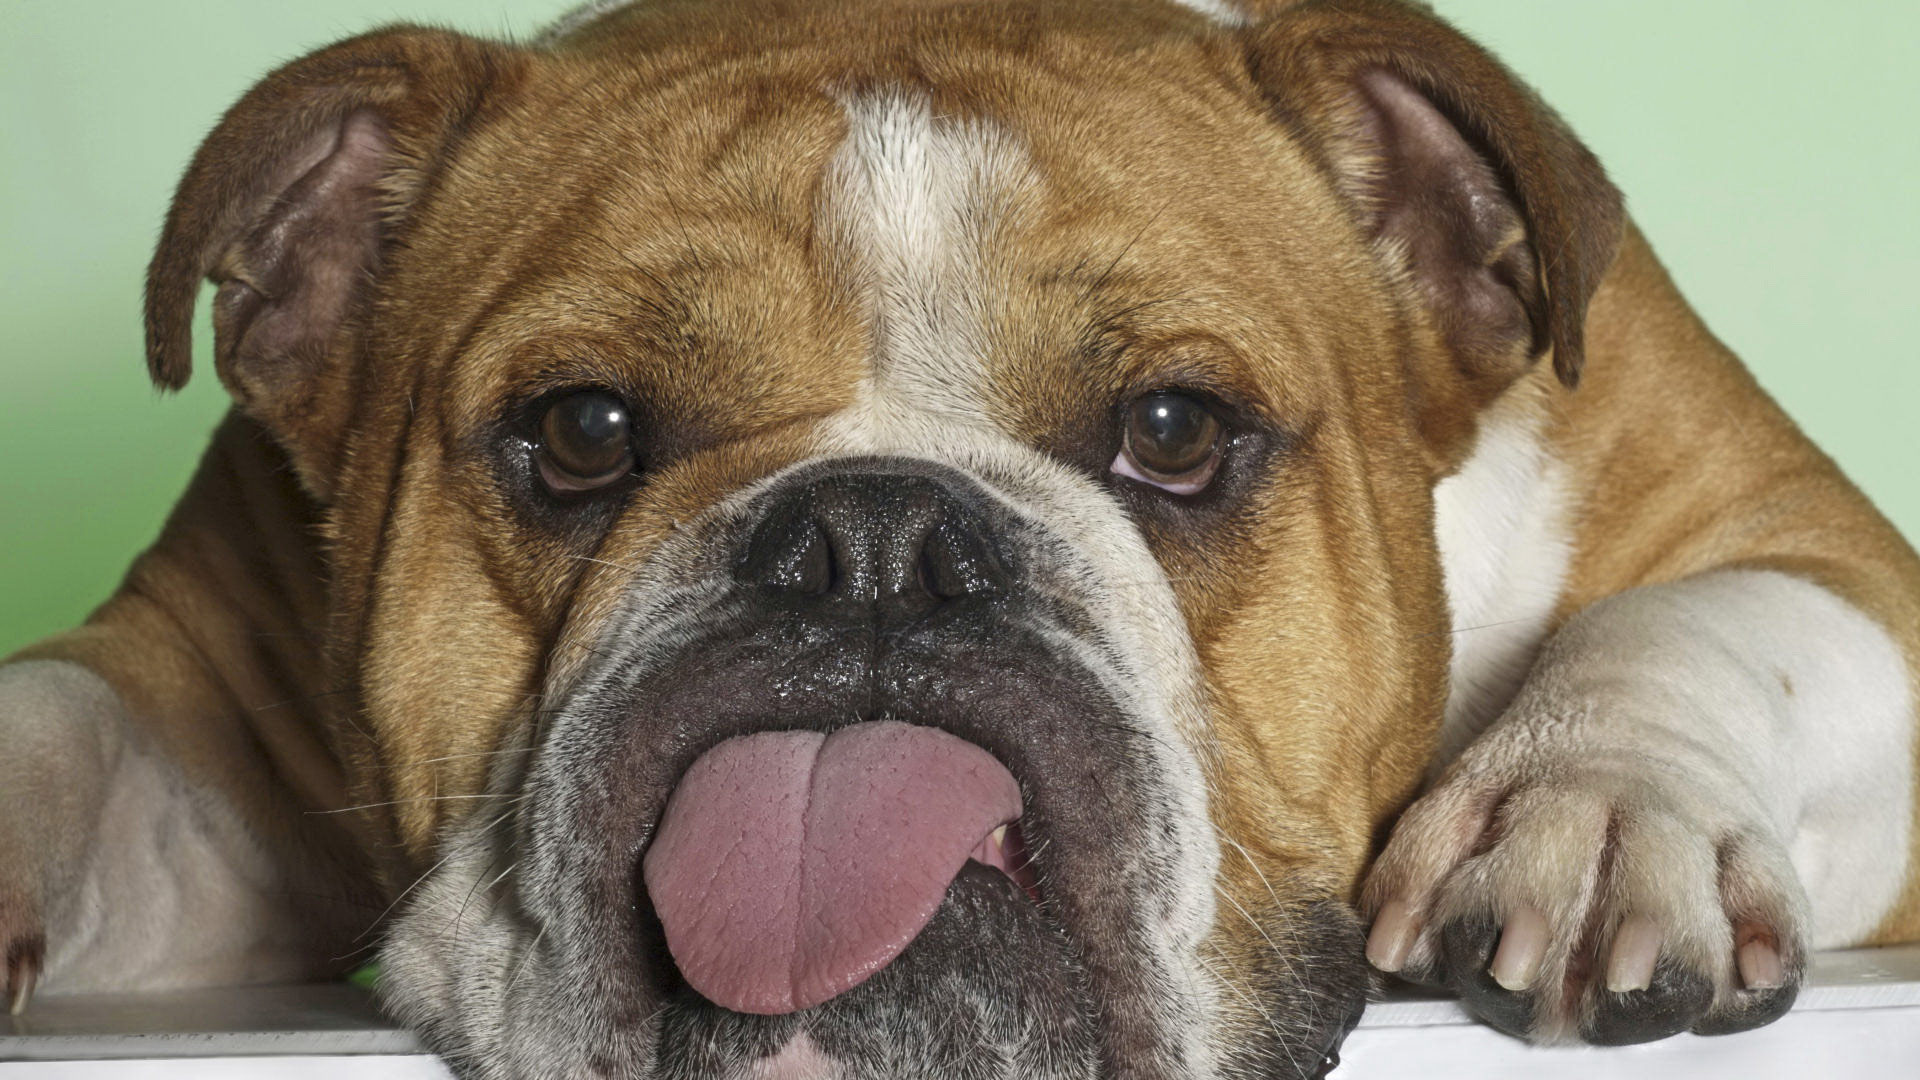 Dogs And Puppies Desktop Wallpaper